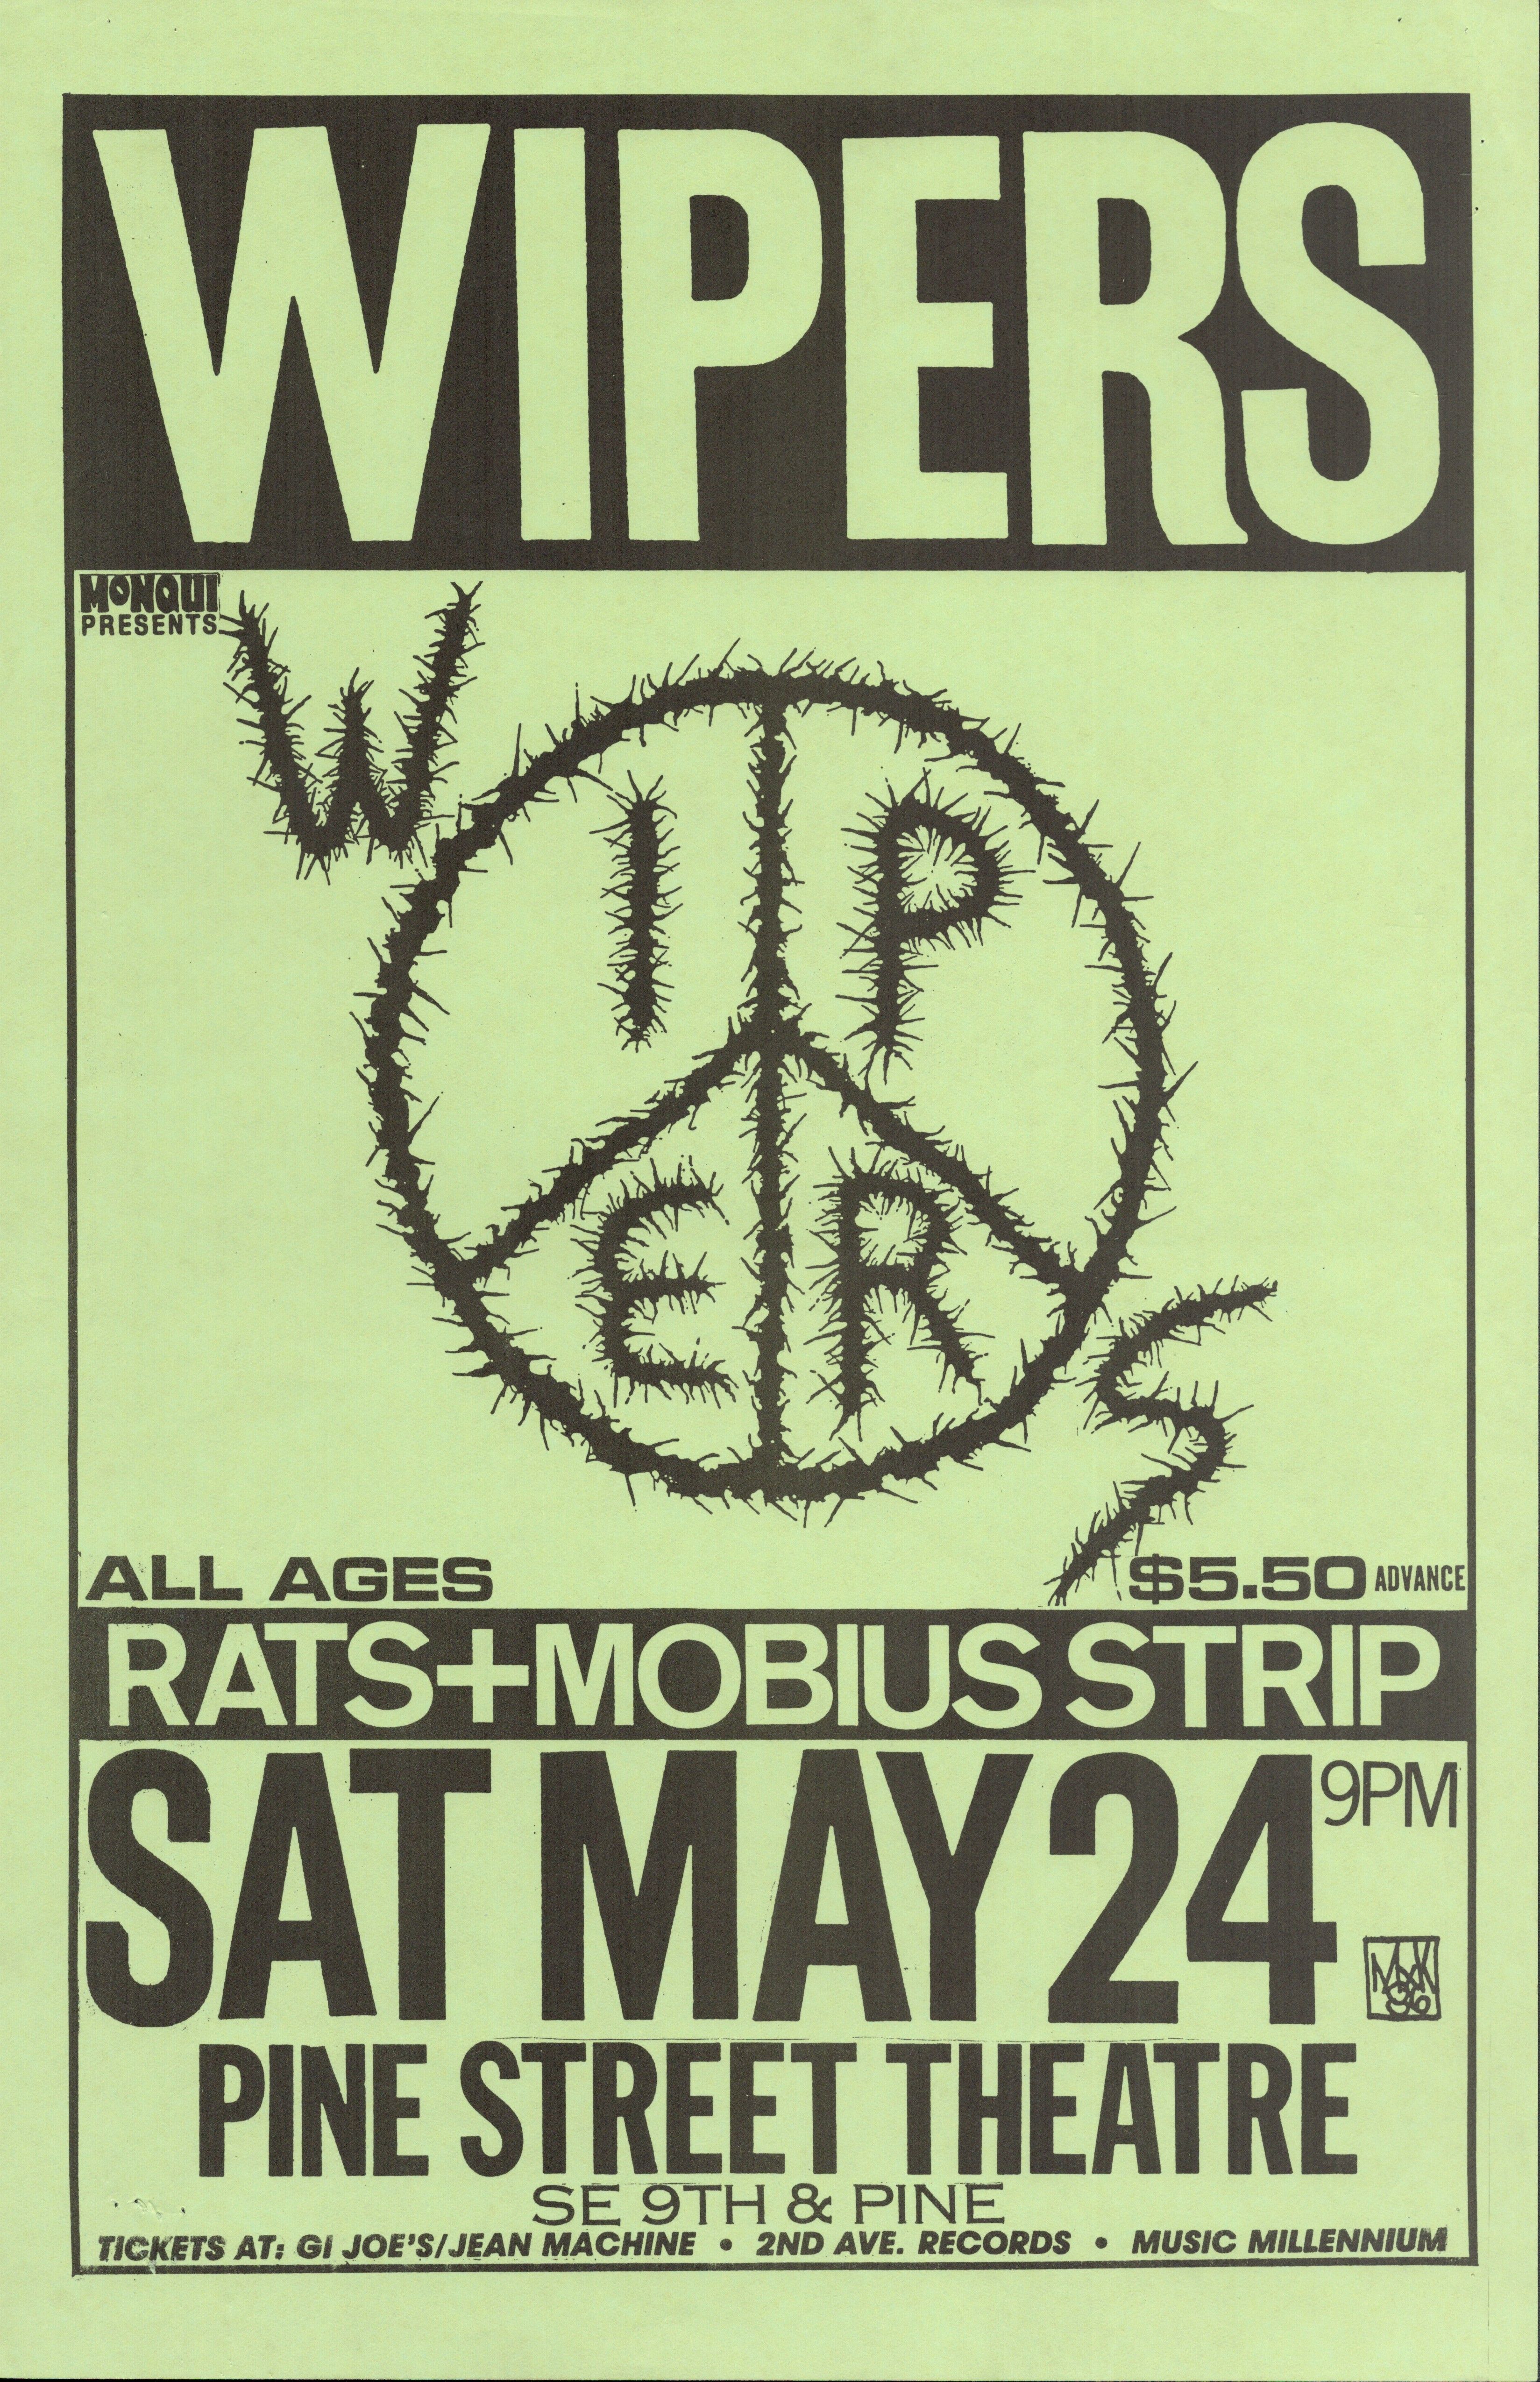 MXP-262.1 Wipers Pine Street Theatre 1986 Concert Poster